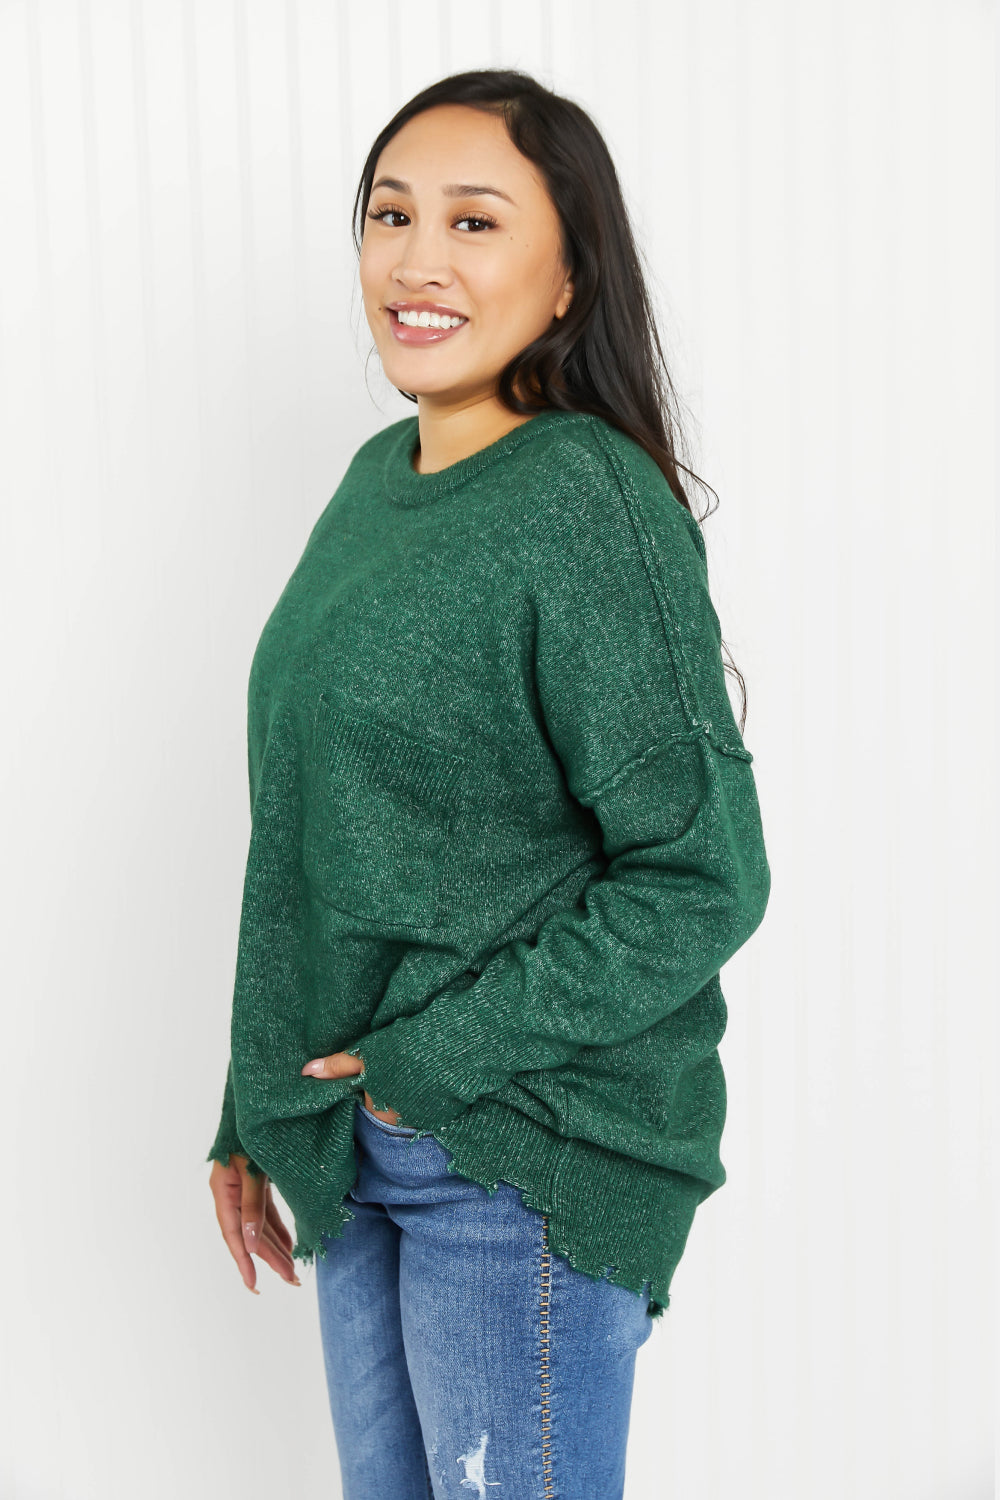 Zenana Pine Views Full Size Distressed Melange Sweater